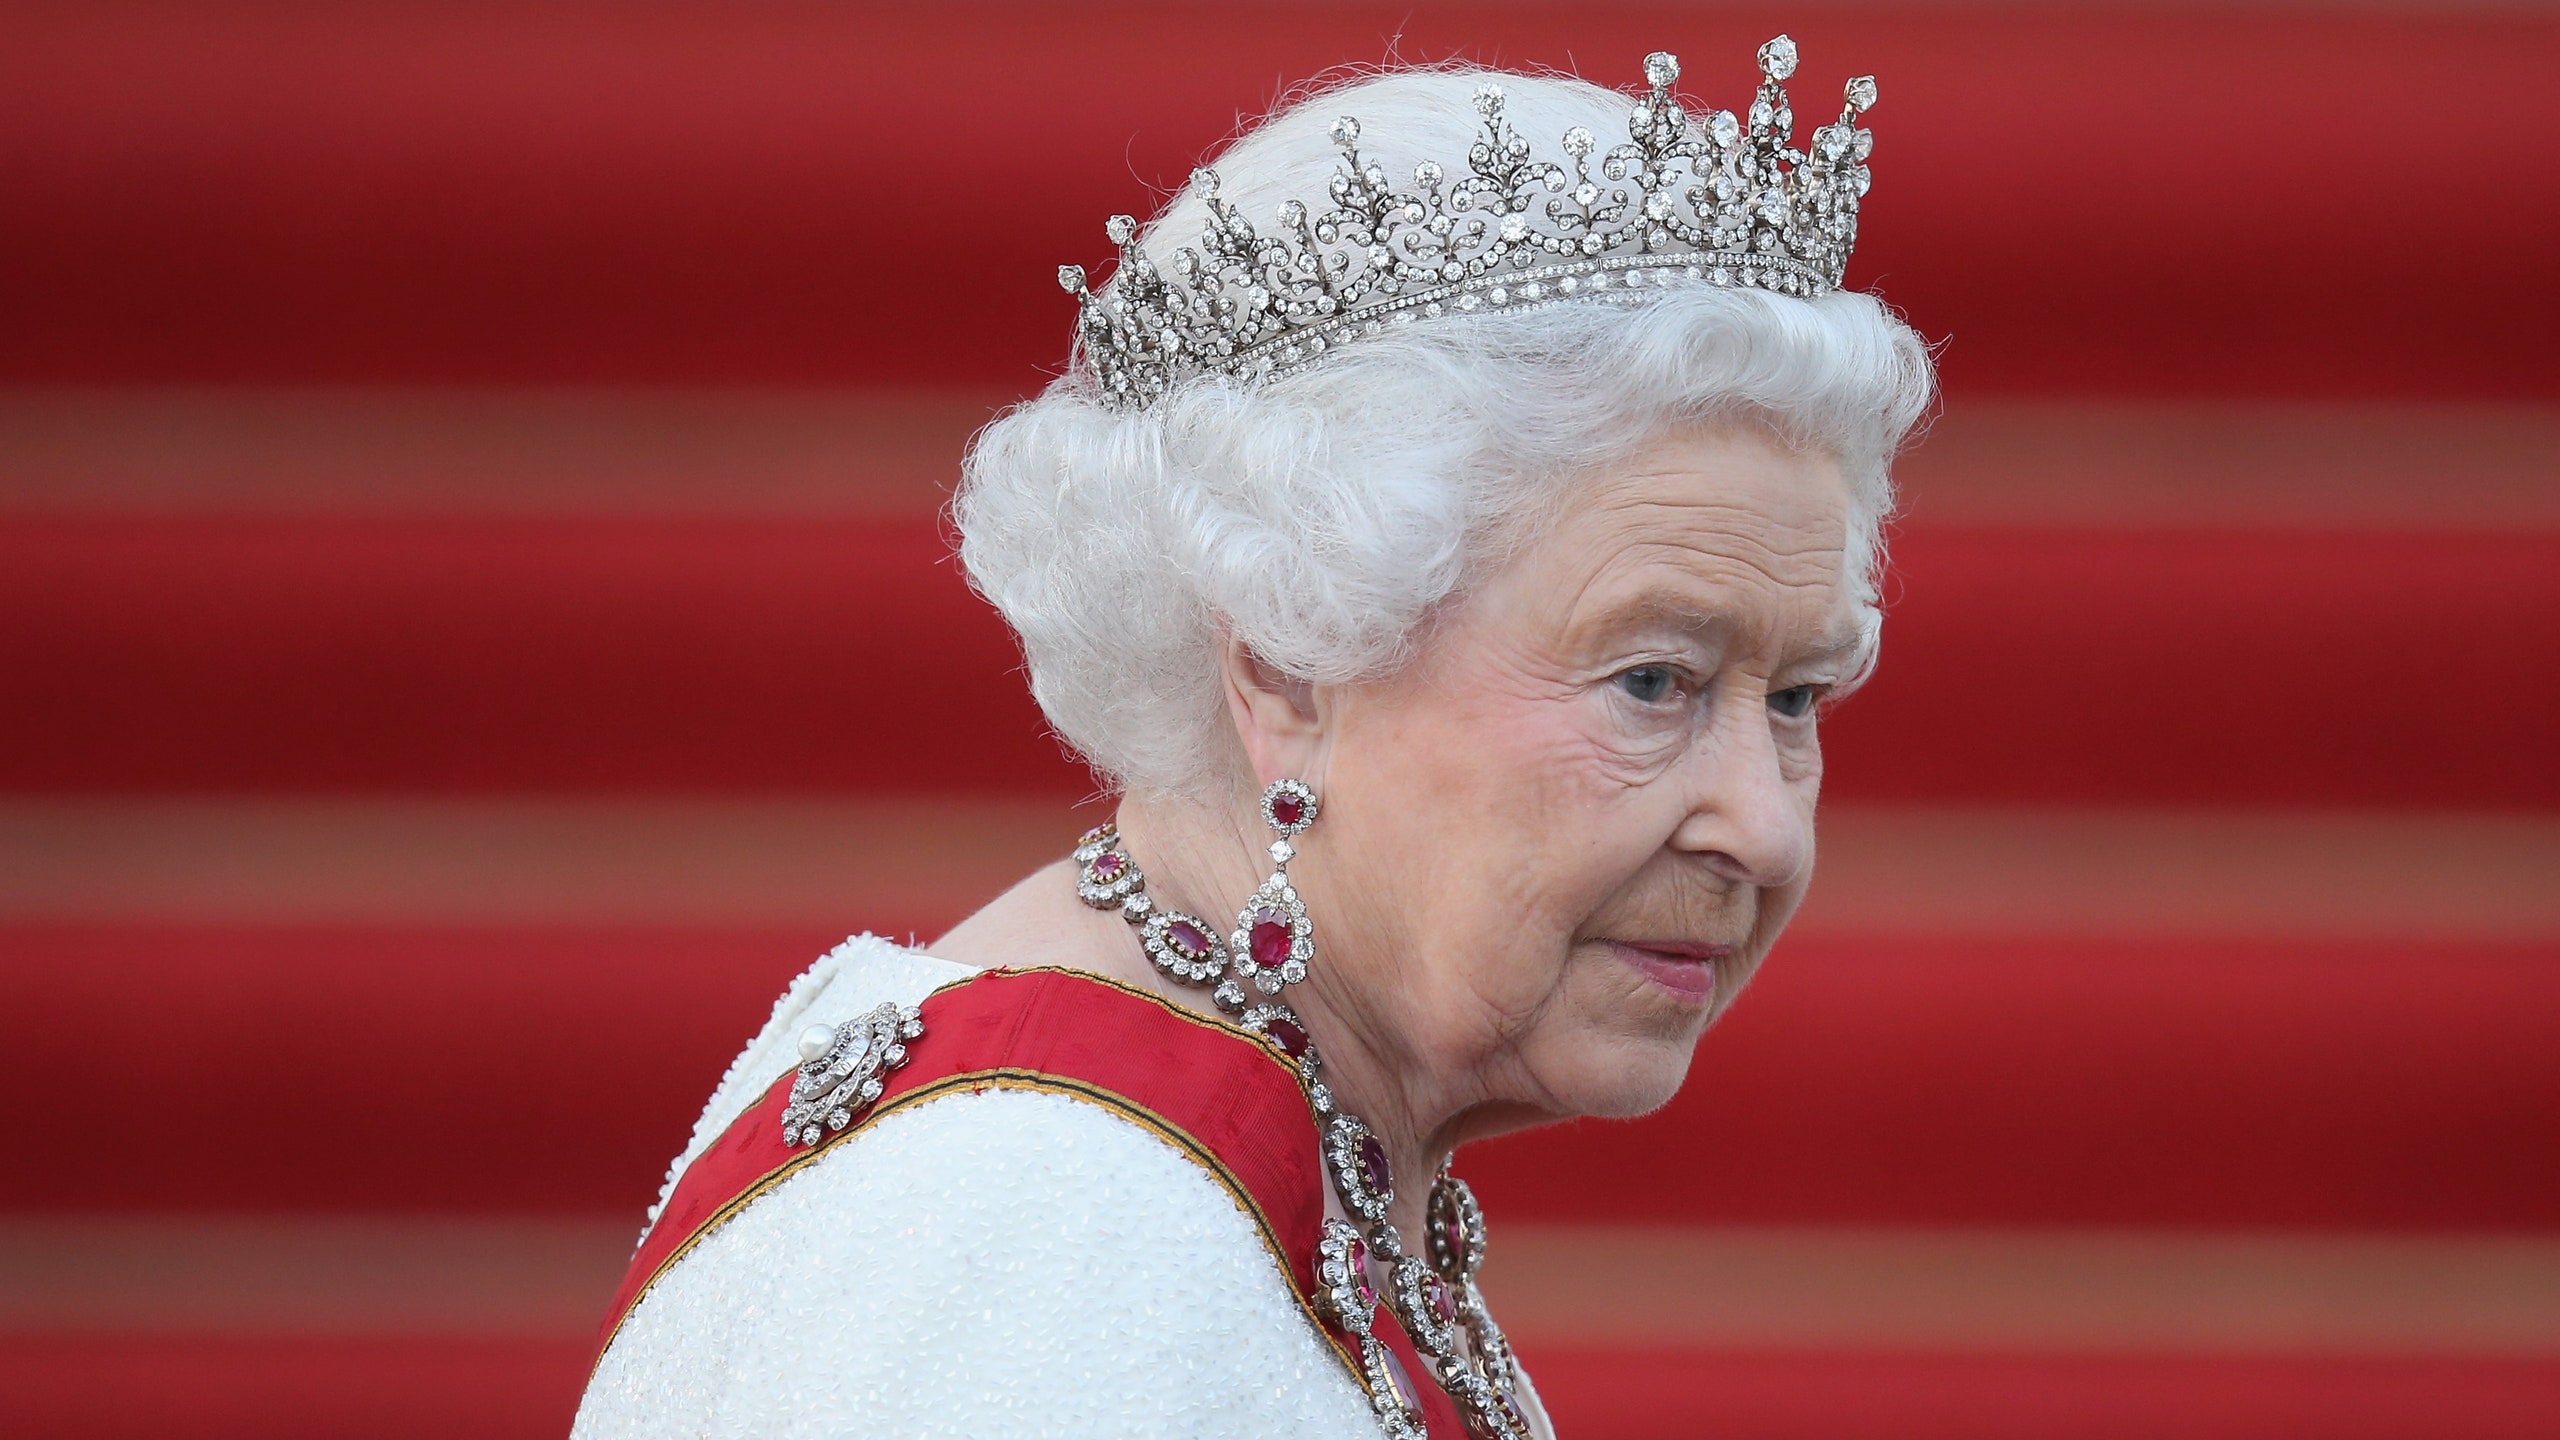 Королева Елизавета II может отречься от престола в течение двух лет